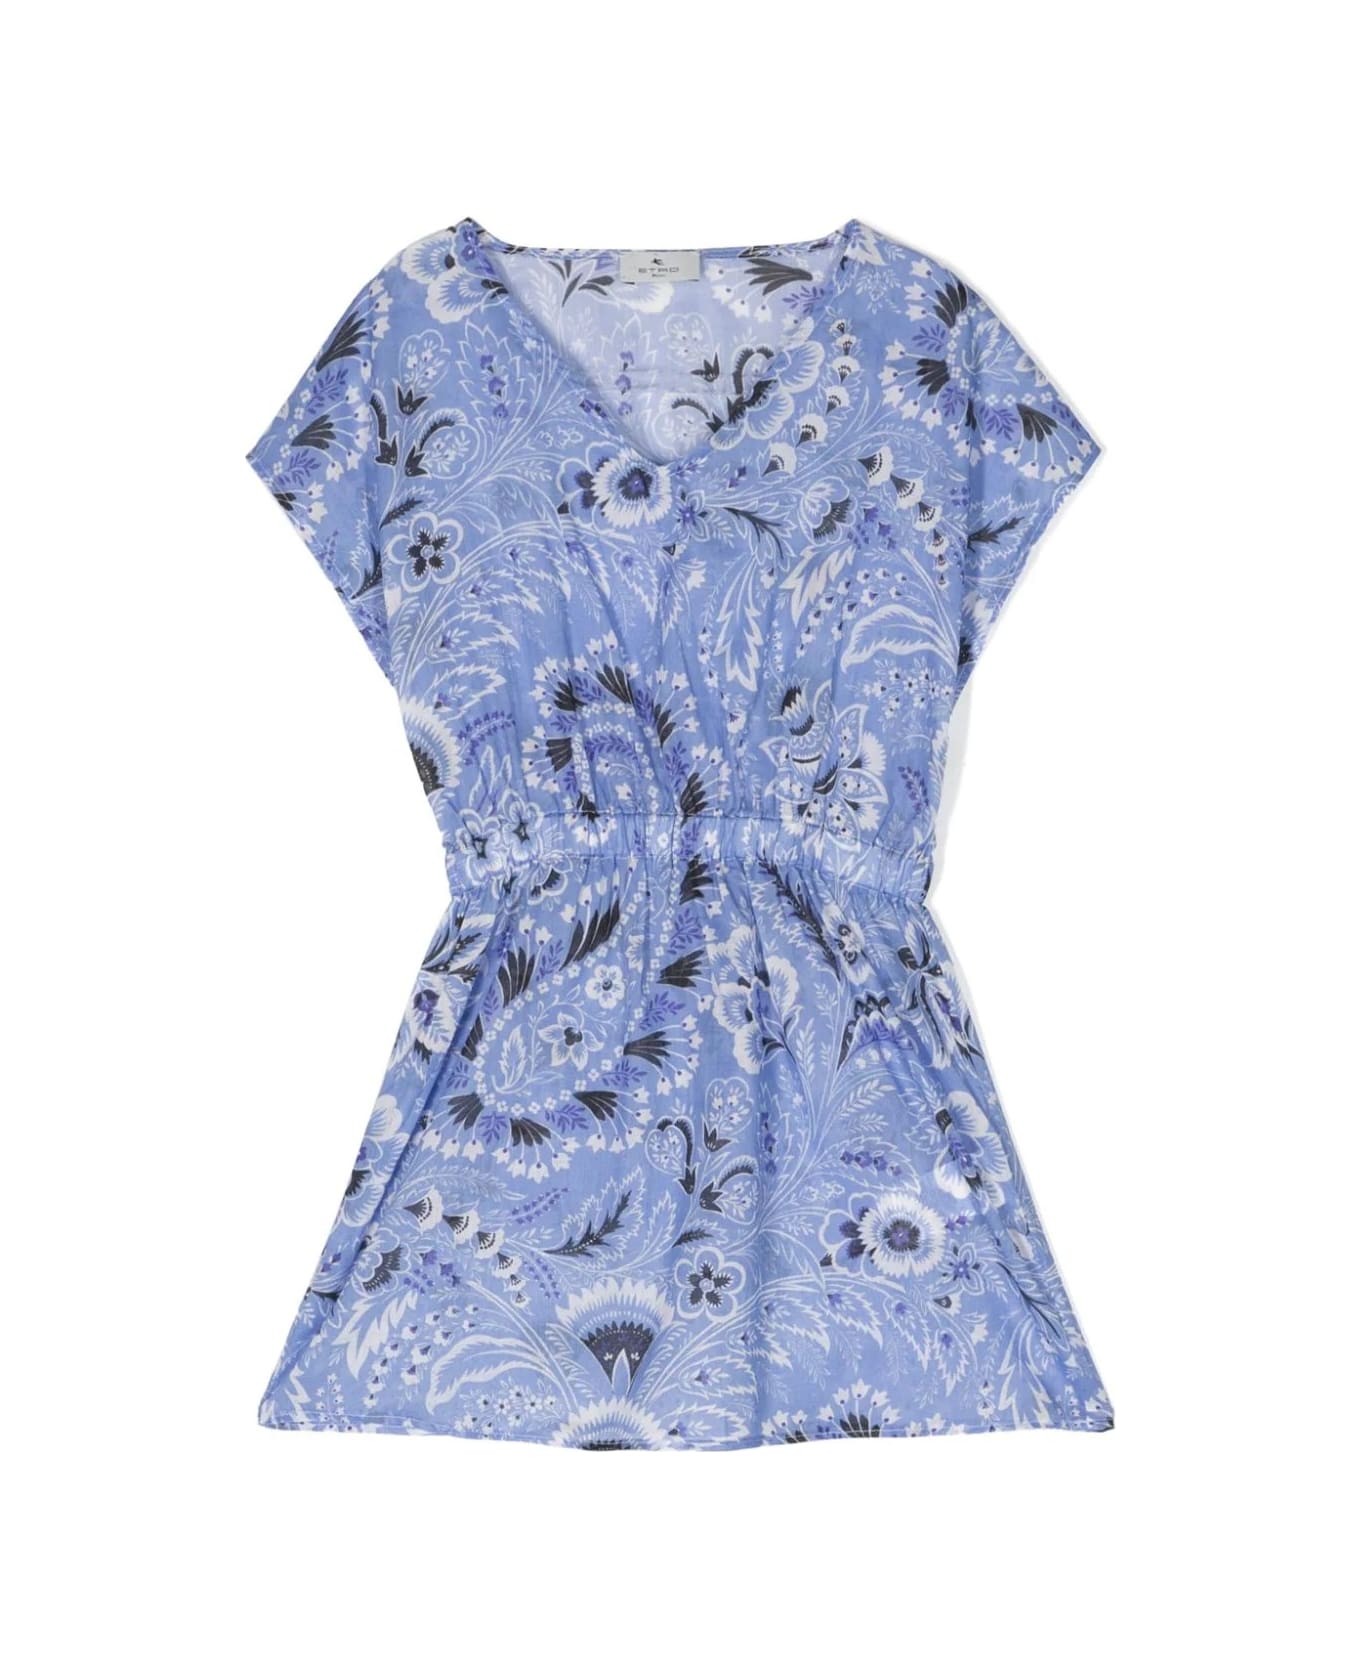 Etro Light Blue Dress With Paisley Print - Blue